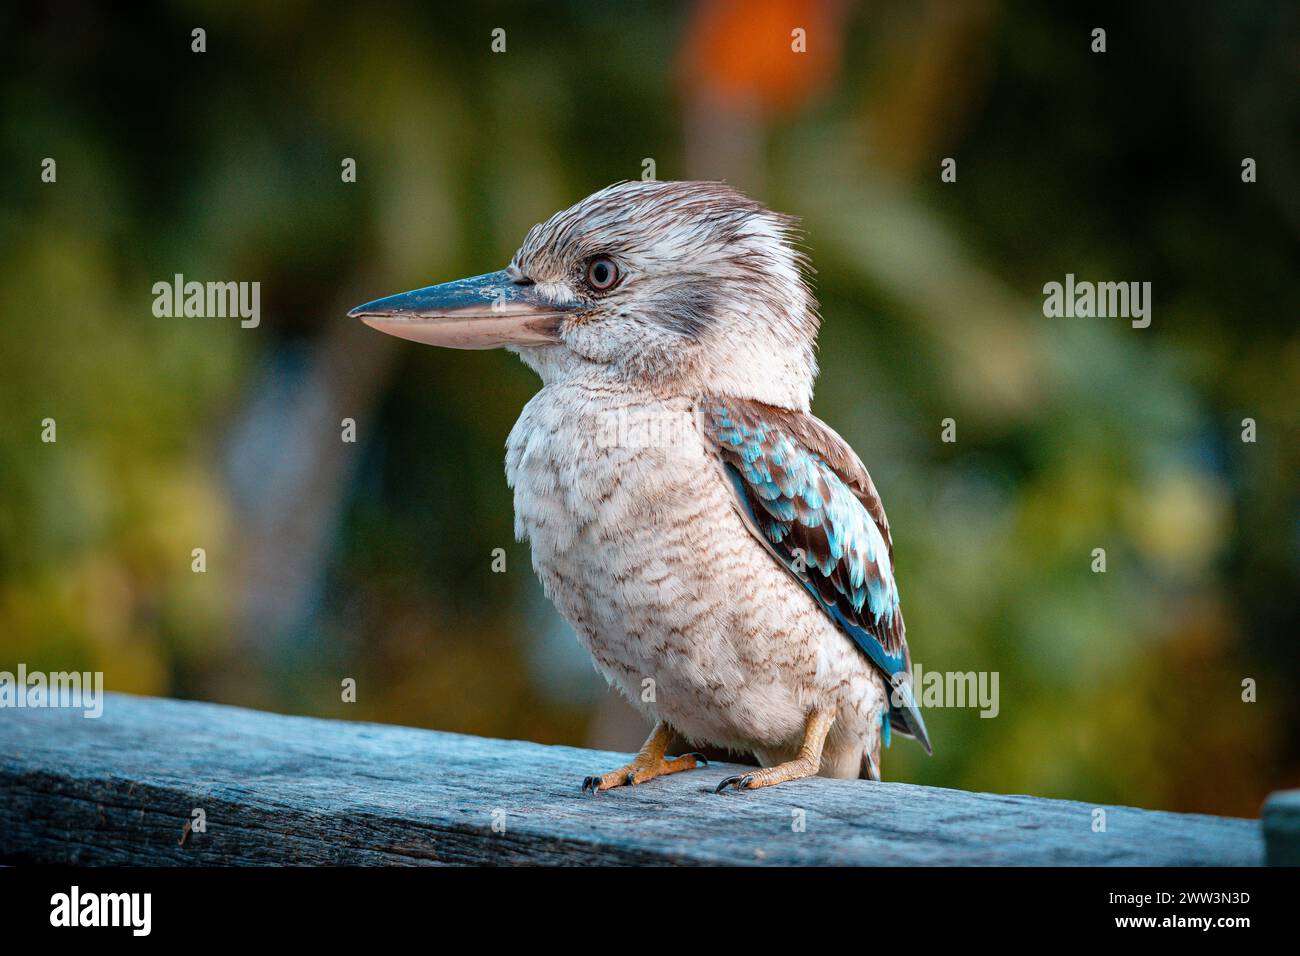 La mirada perceptiva de un Kookaburra con alas azules en la isla magnética Foto de stock